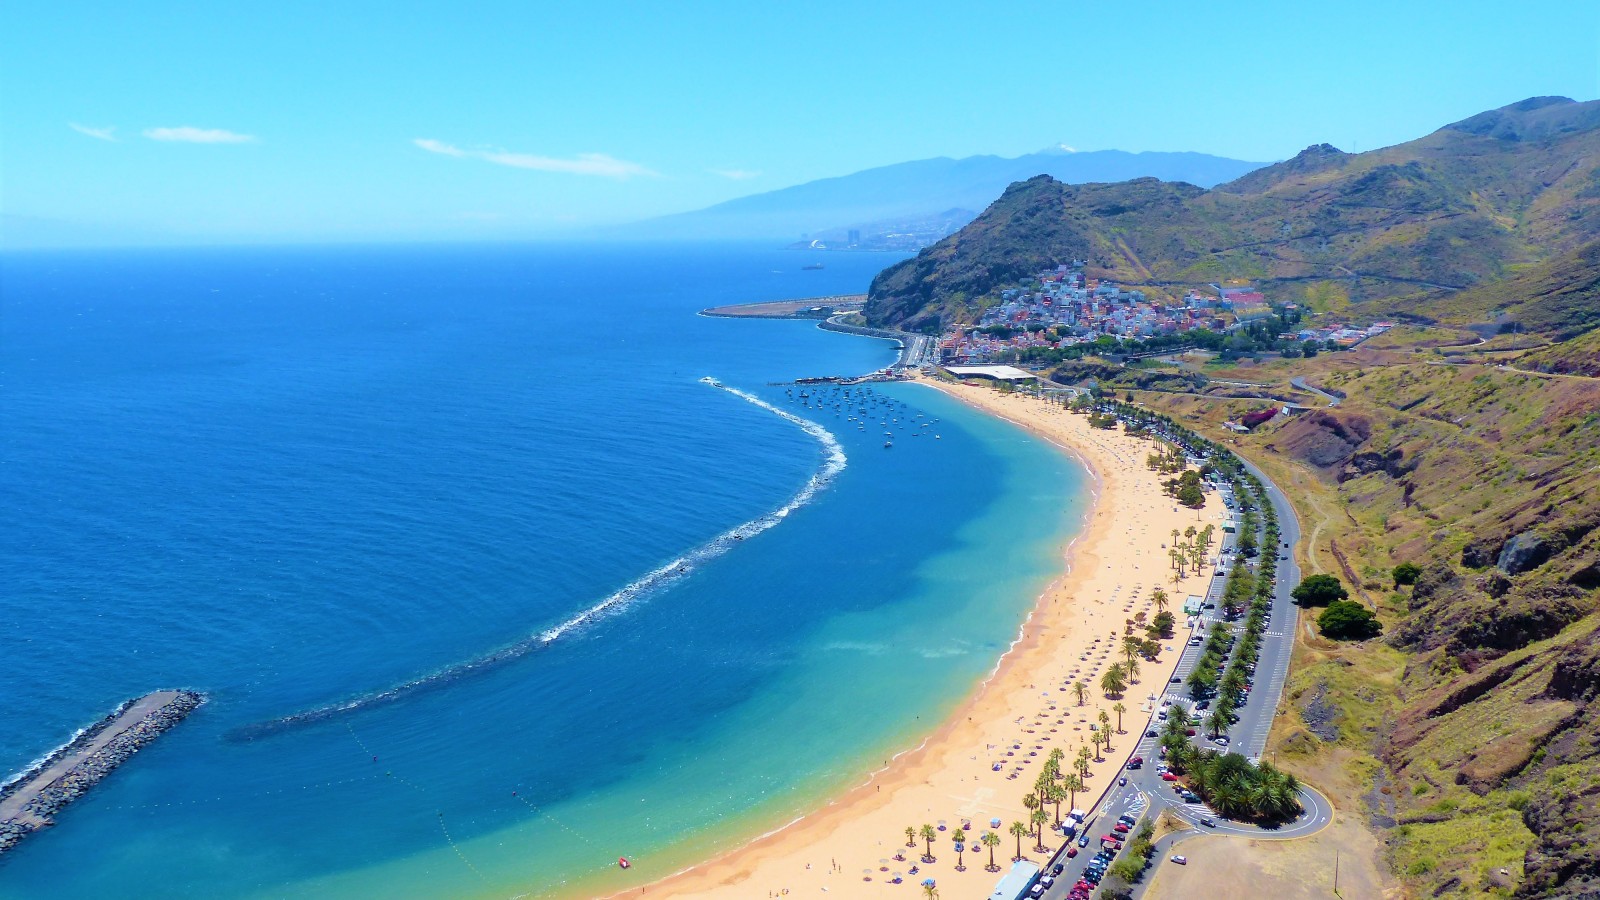 Playa de Las Teresitas in Tenerife is a long golden beach